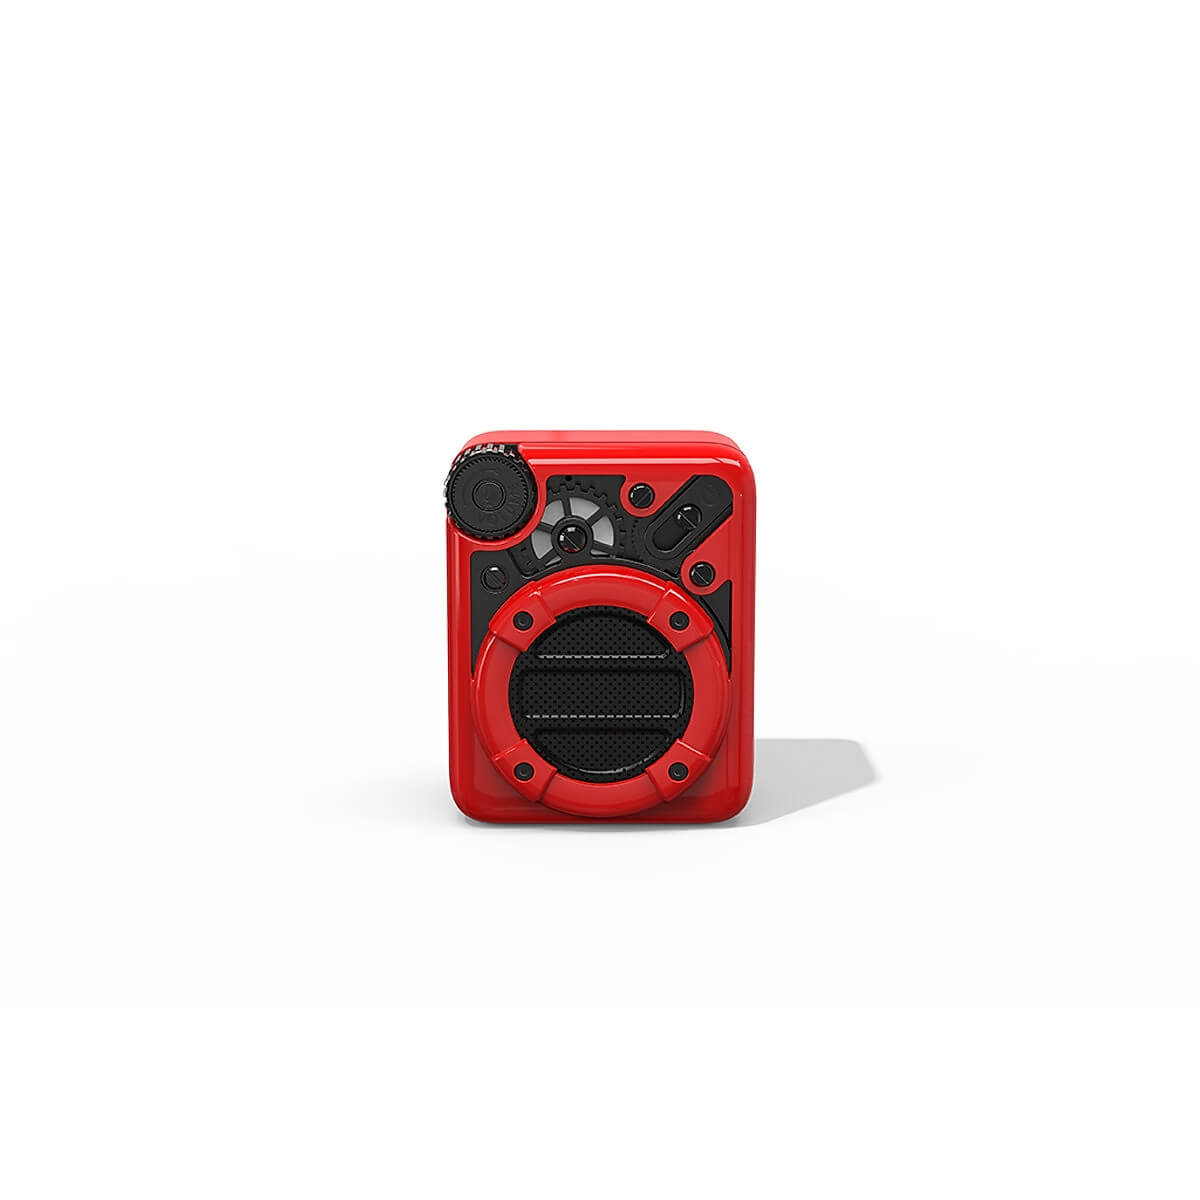 Loa Divoom Espresso 4W Tích Hợp Bluetooth v 5.0, FM Radio Và TF Card